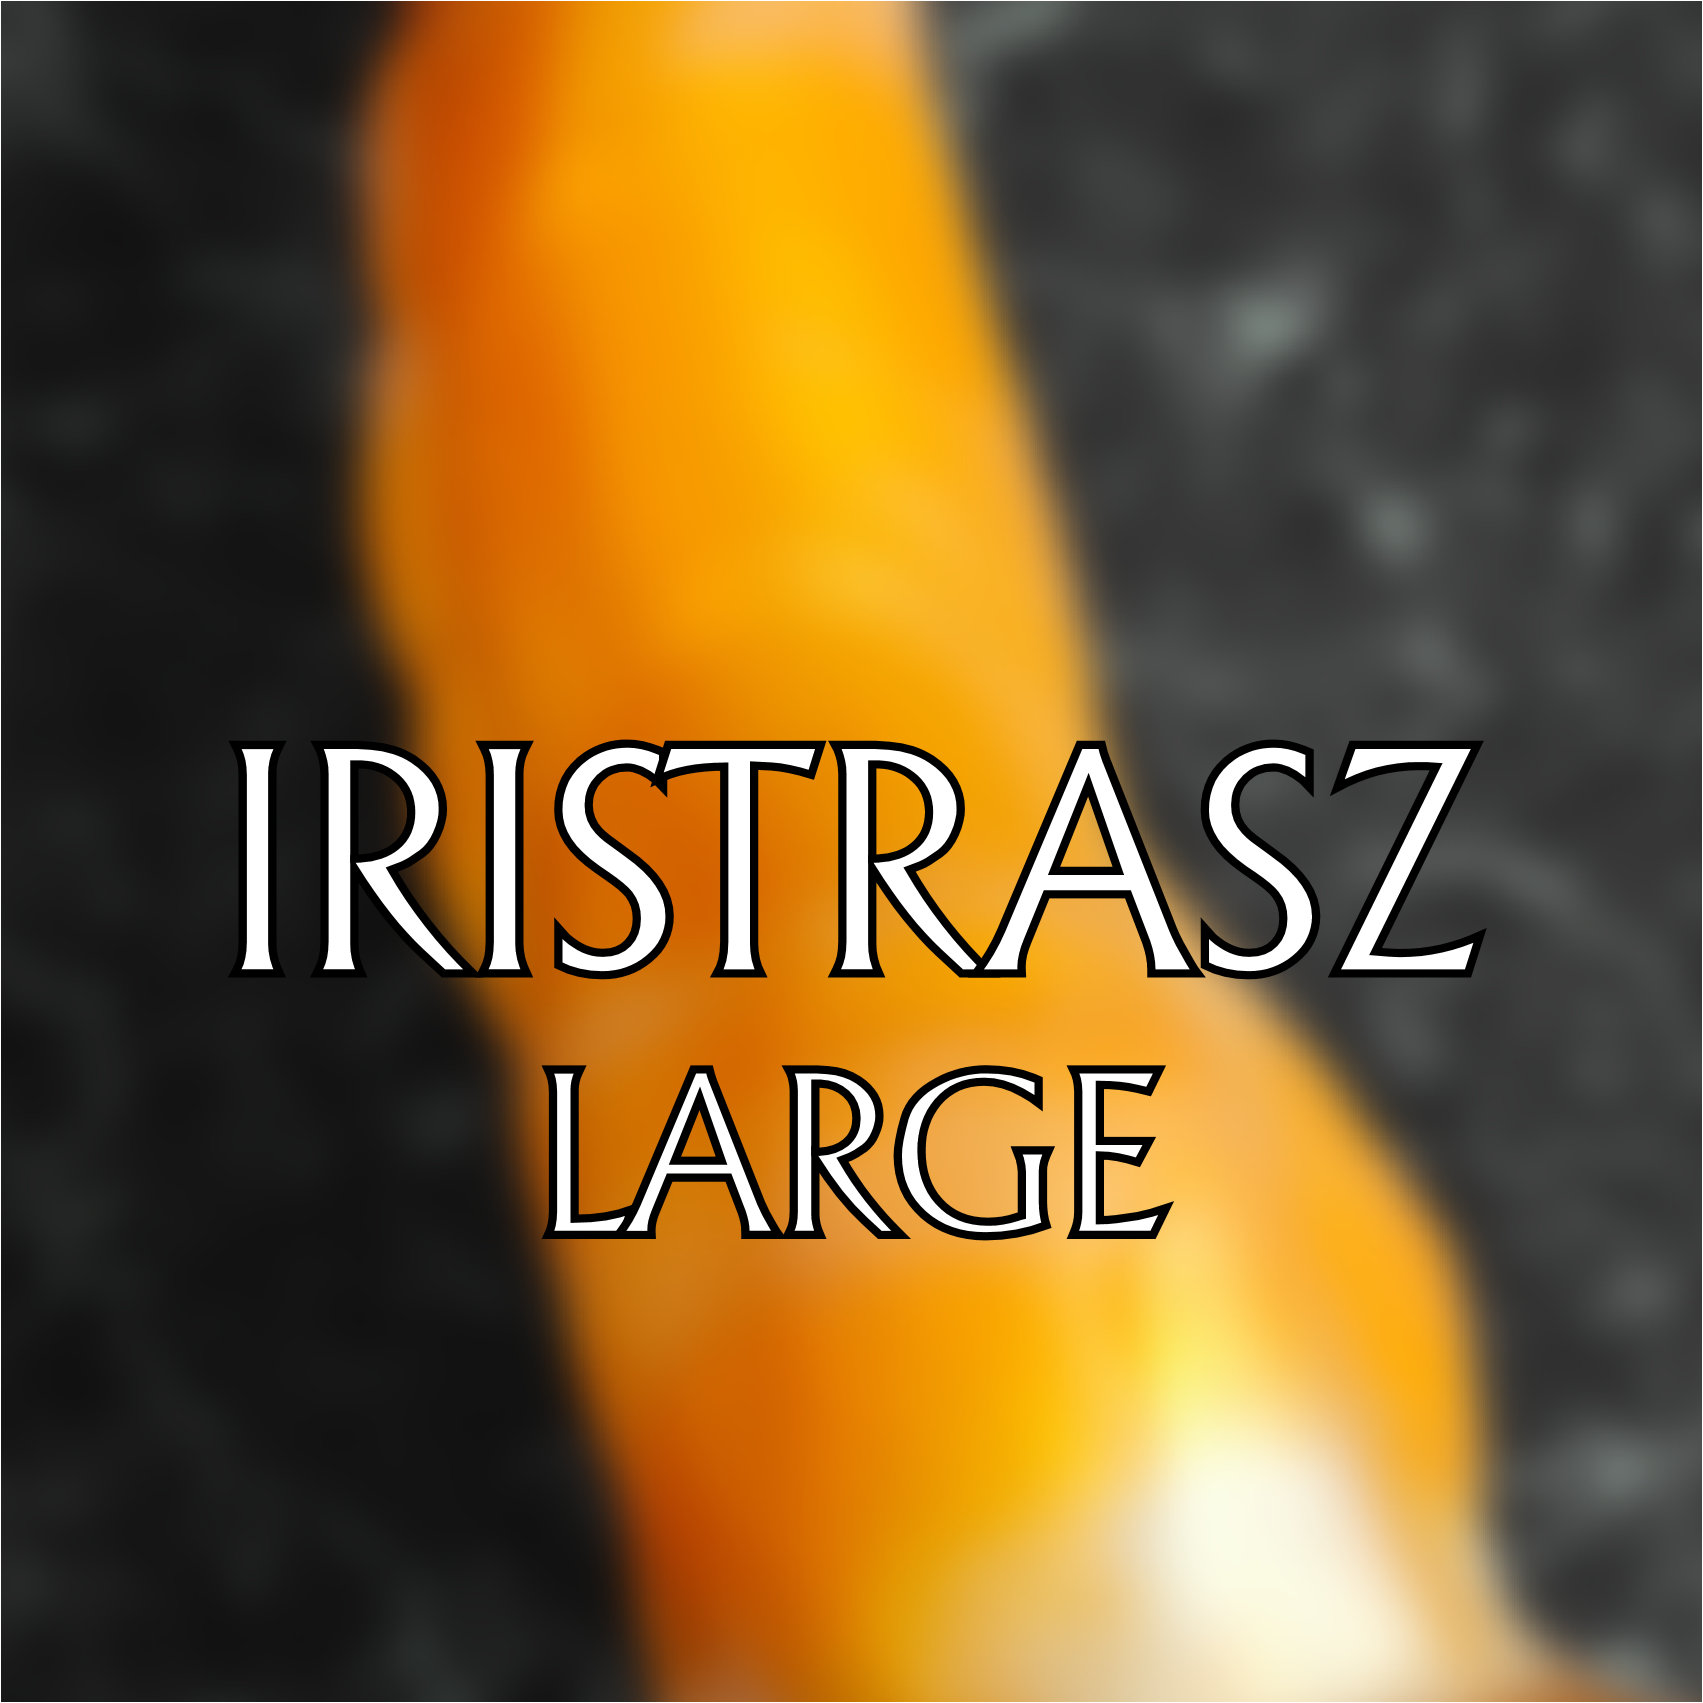 Iristrasz (Large) photo